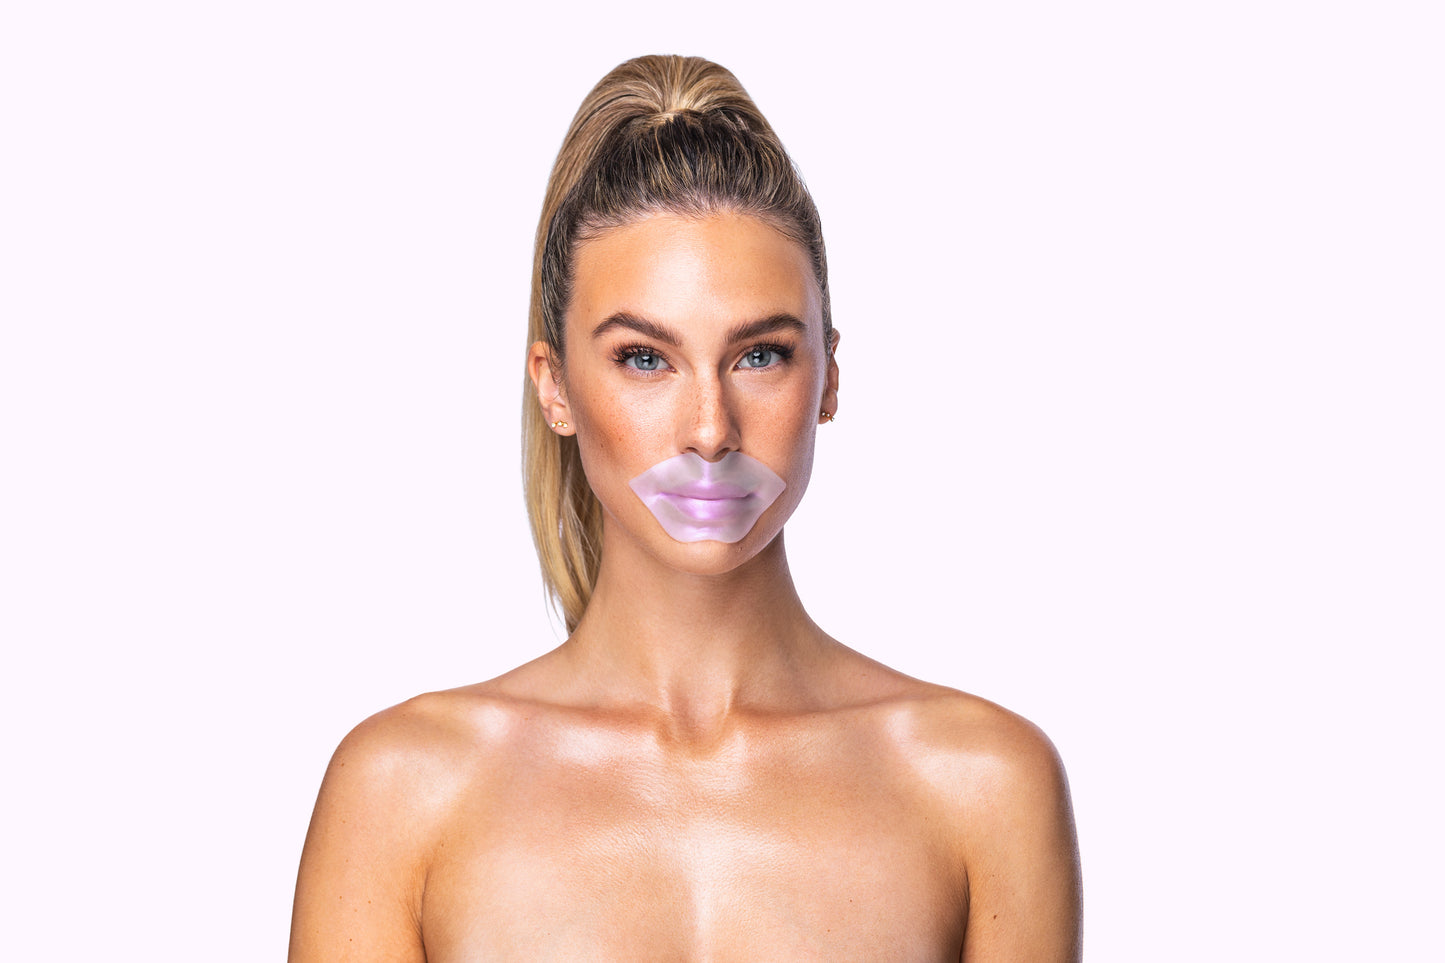 Knesko Skin- Diamond Radiance Lip Mask